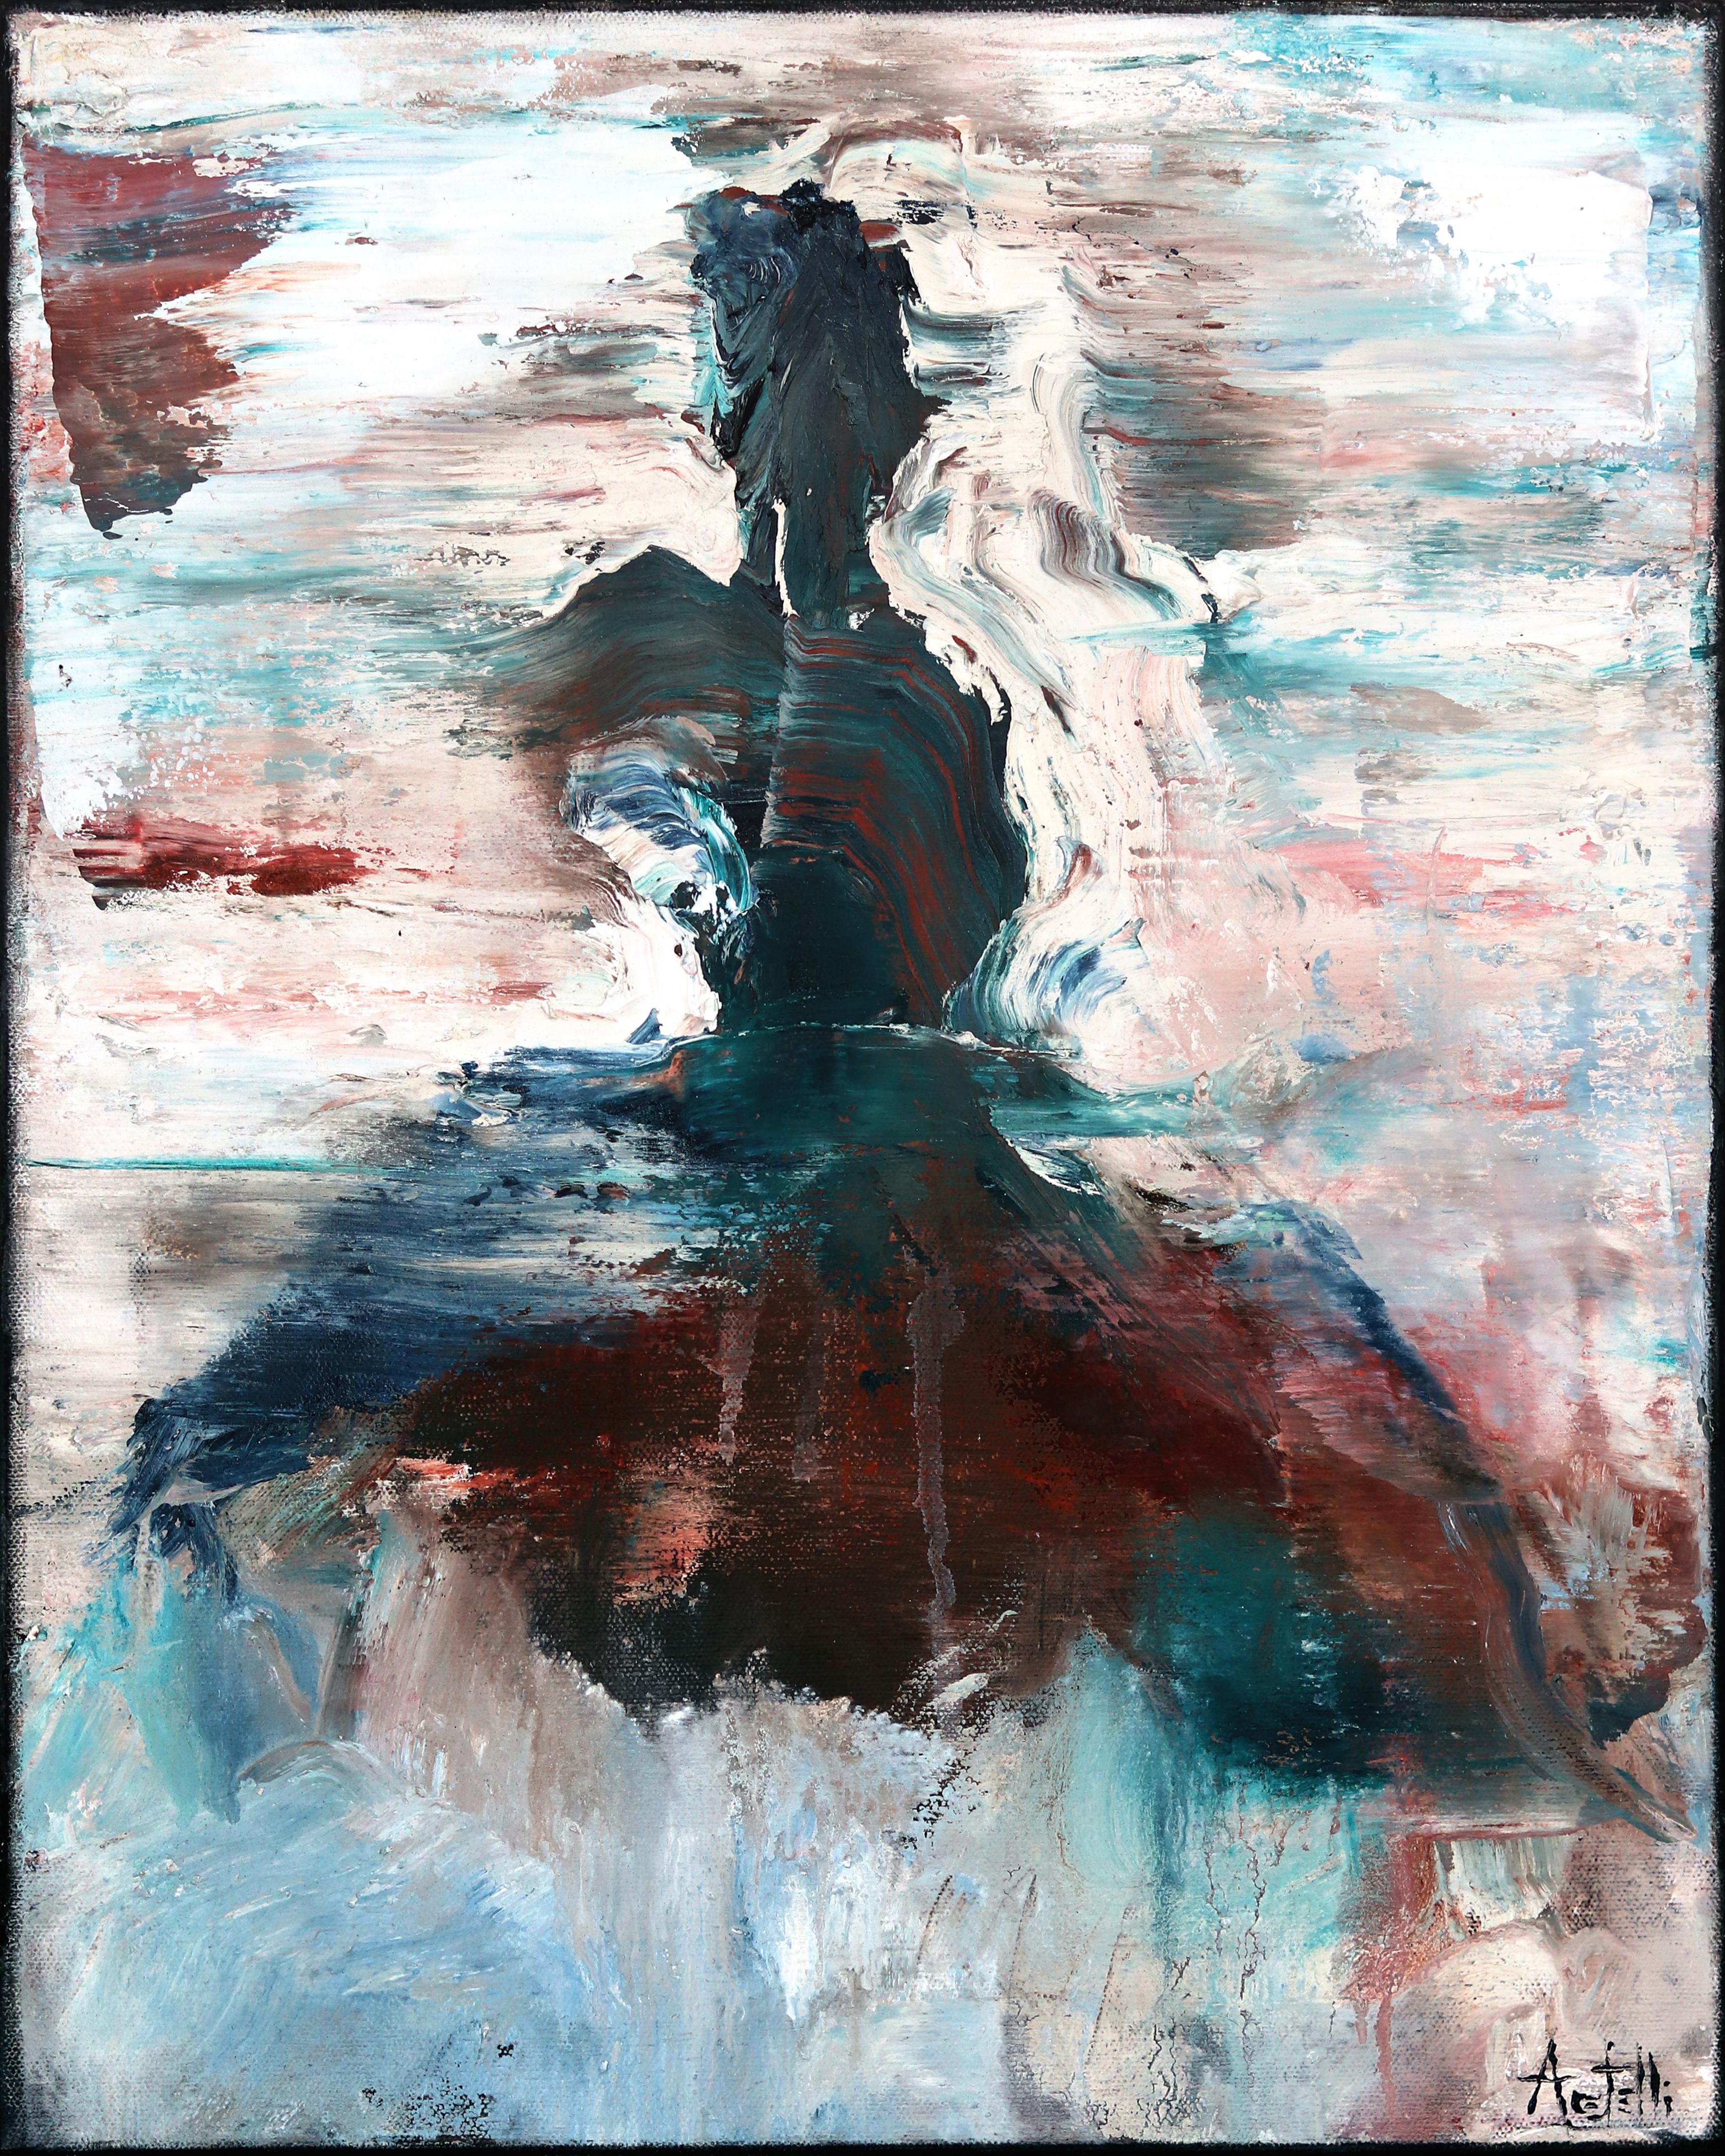 Mark Acetelli Portrait Painting - Paloma's Dance - Original Oil on Canvas Abstract Figurative Dancer Painting